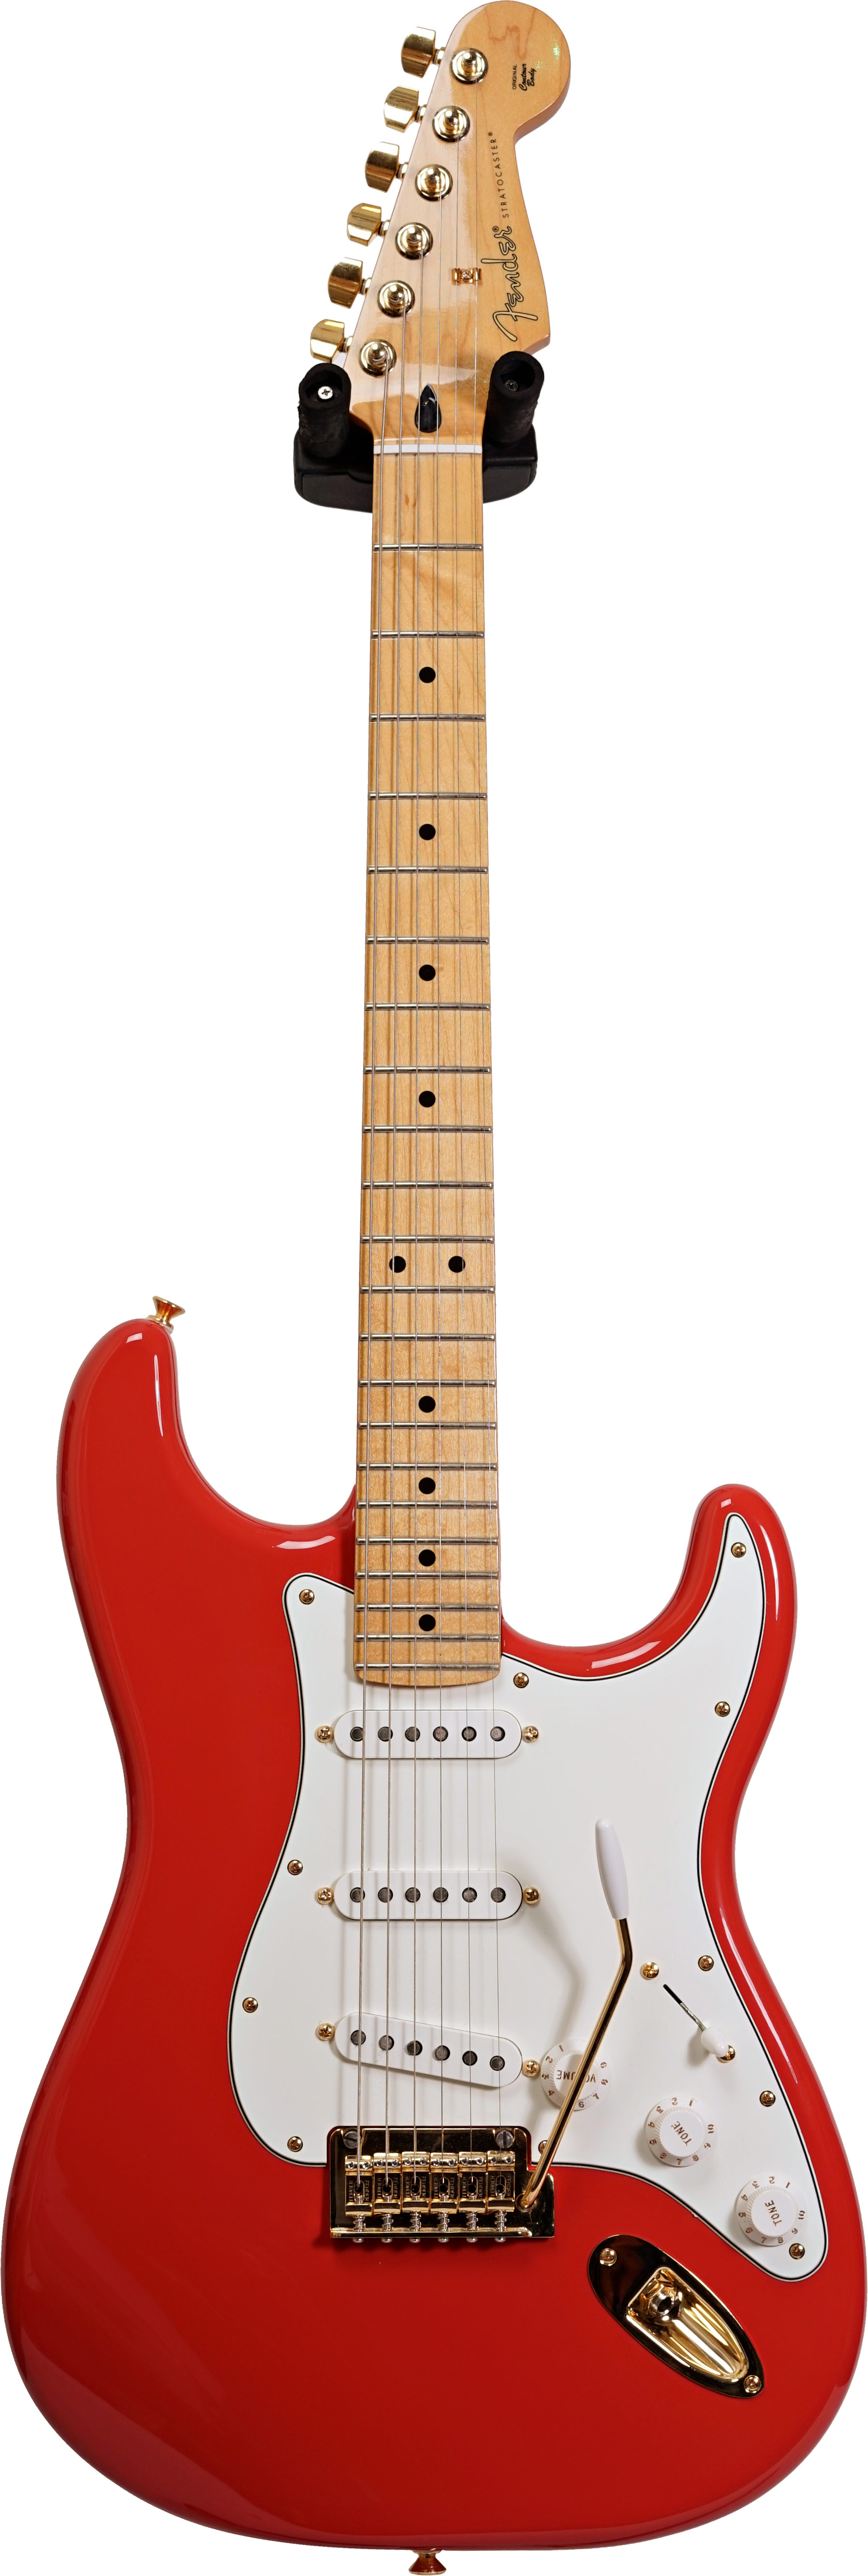 Fender Stratocaster Fiesta Red (Limited Edition) guitarguitar